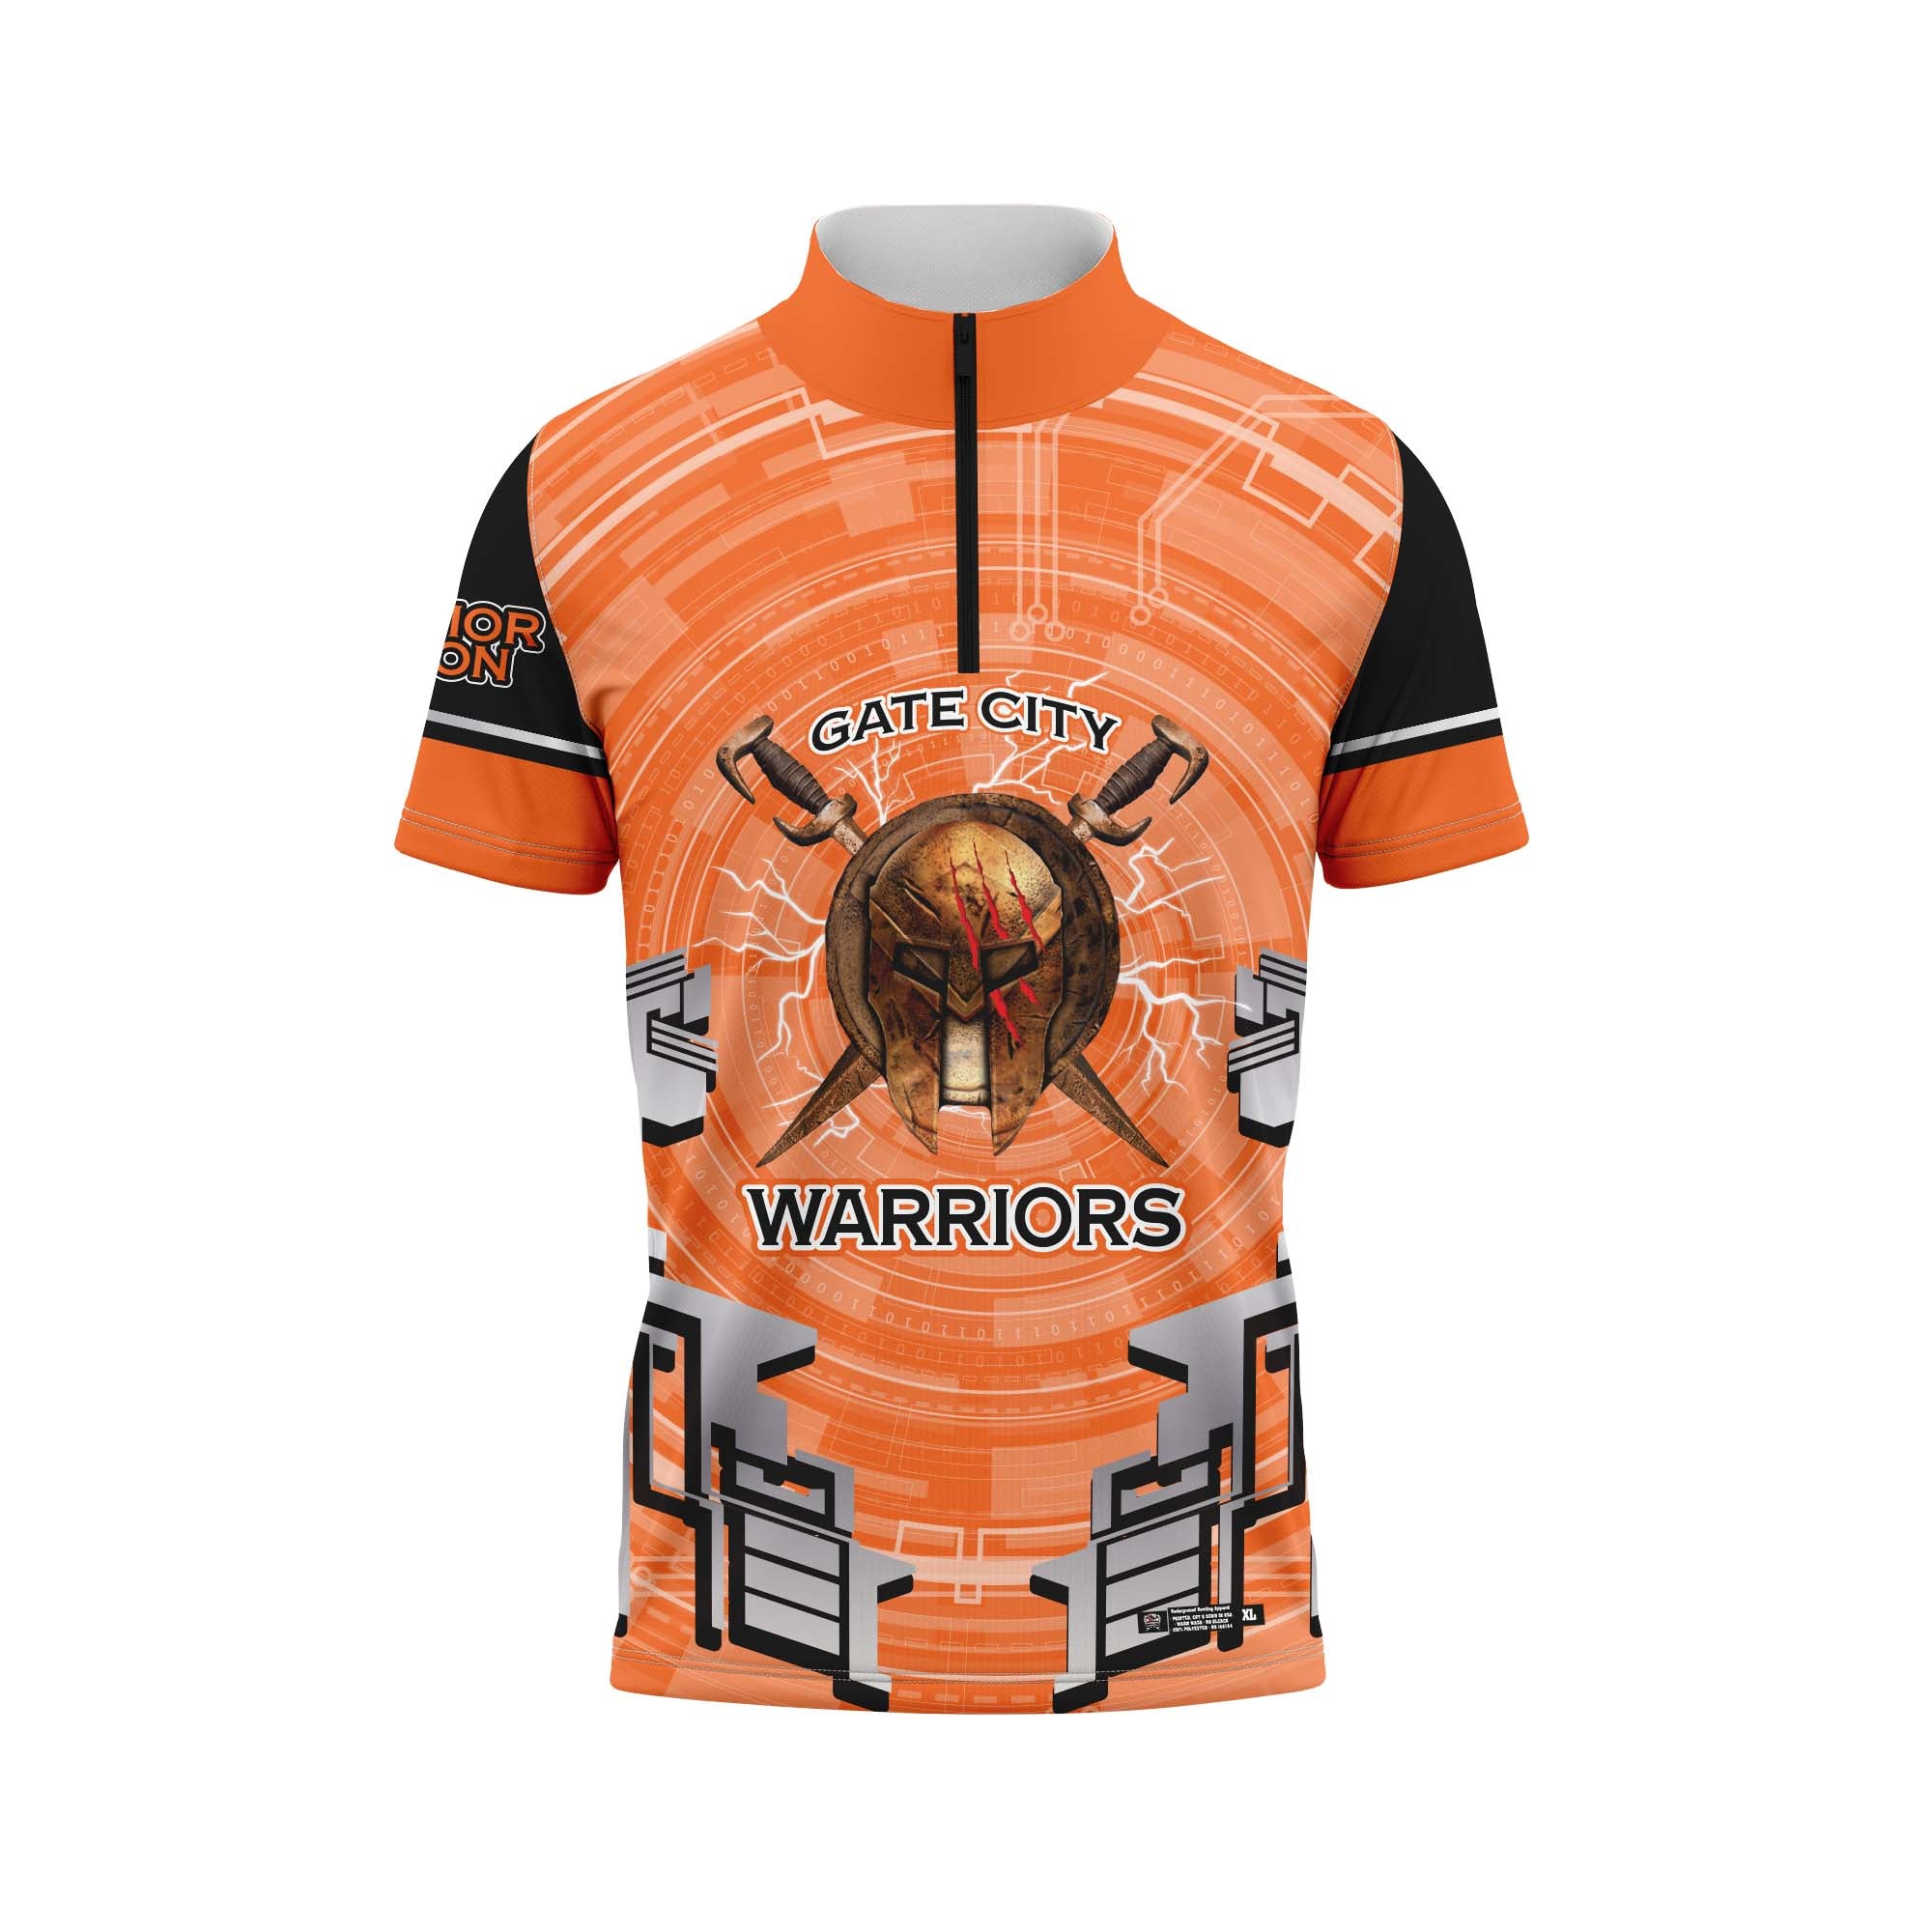 Gate City Warriors Orange / Silver Jersey